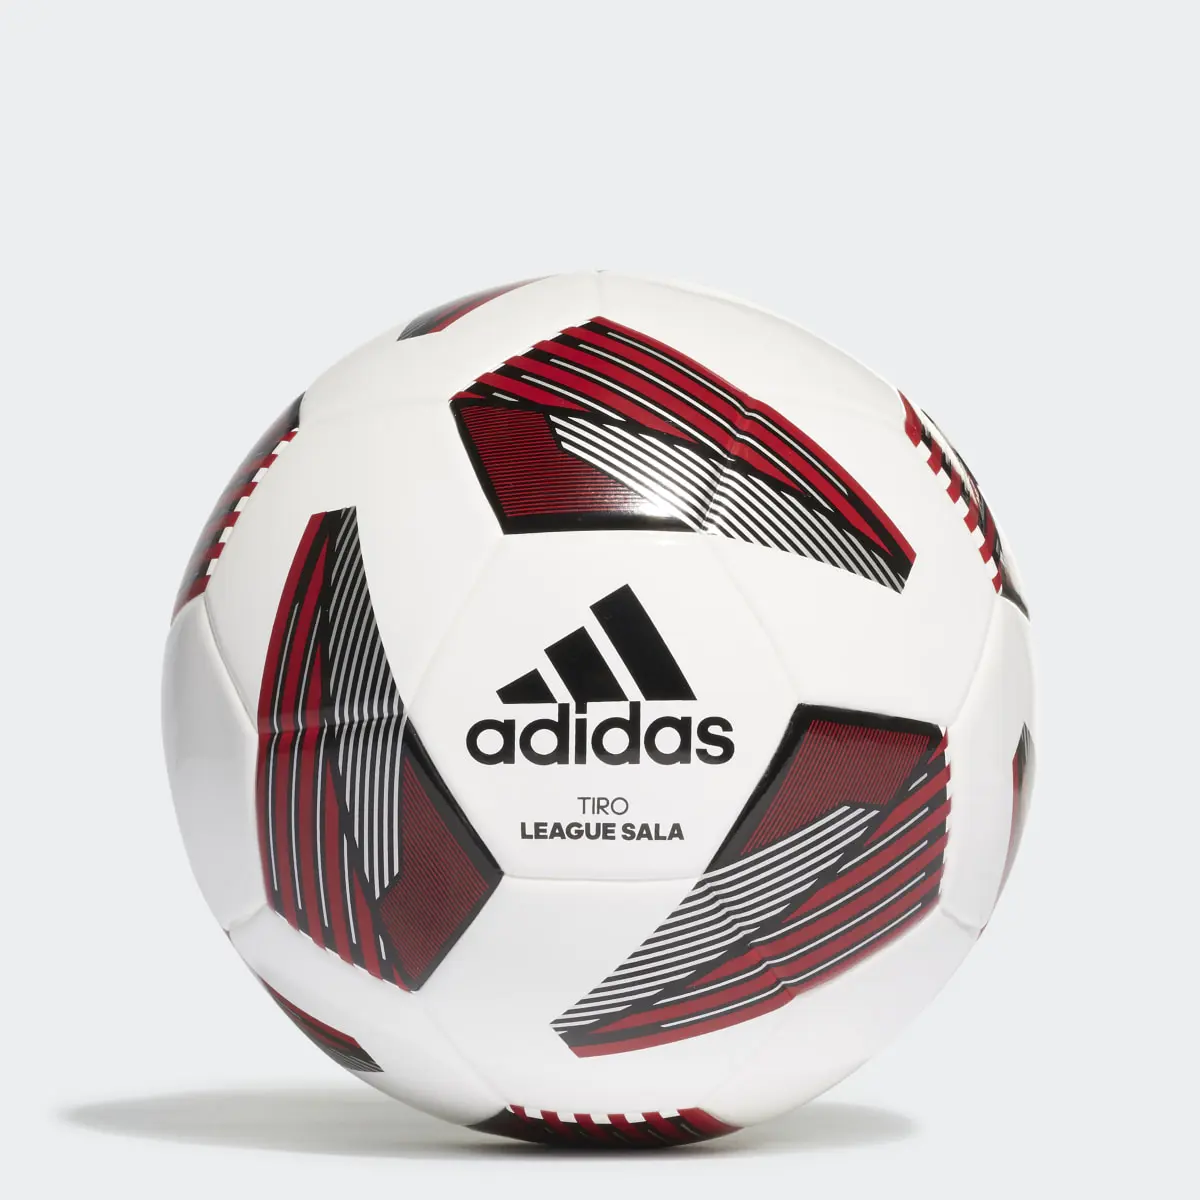 Adidas Tiro League Sala Ball. 1